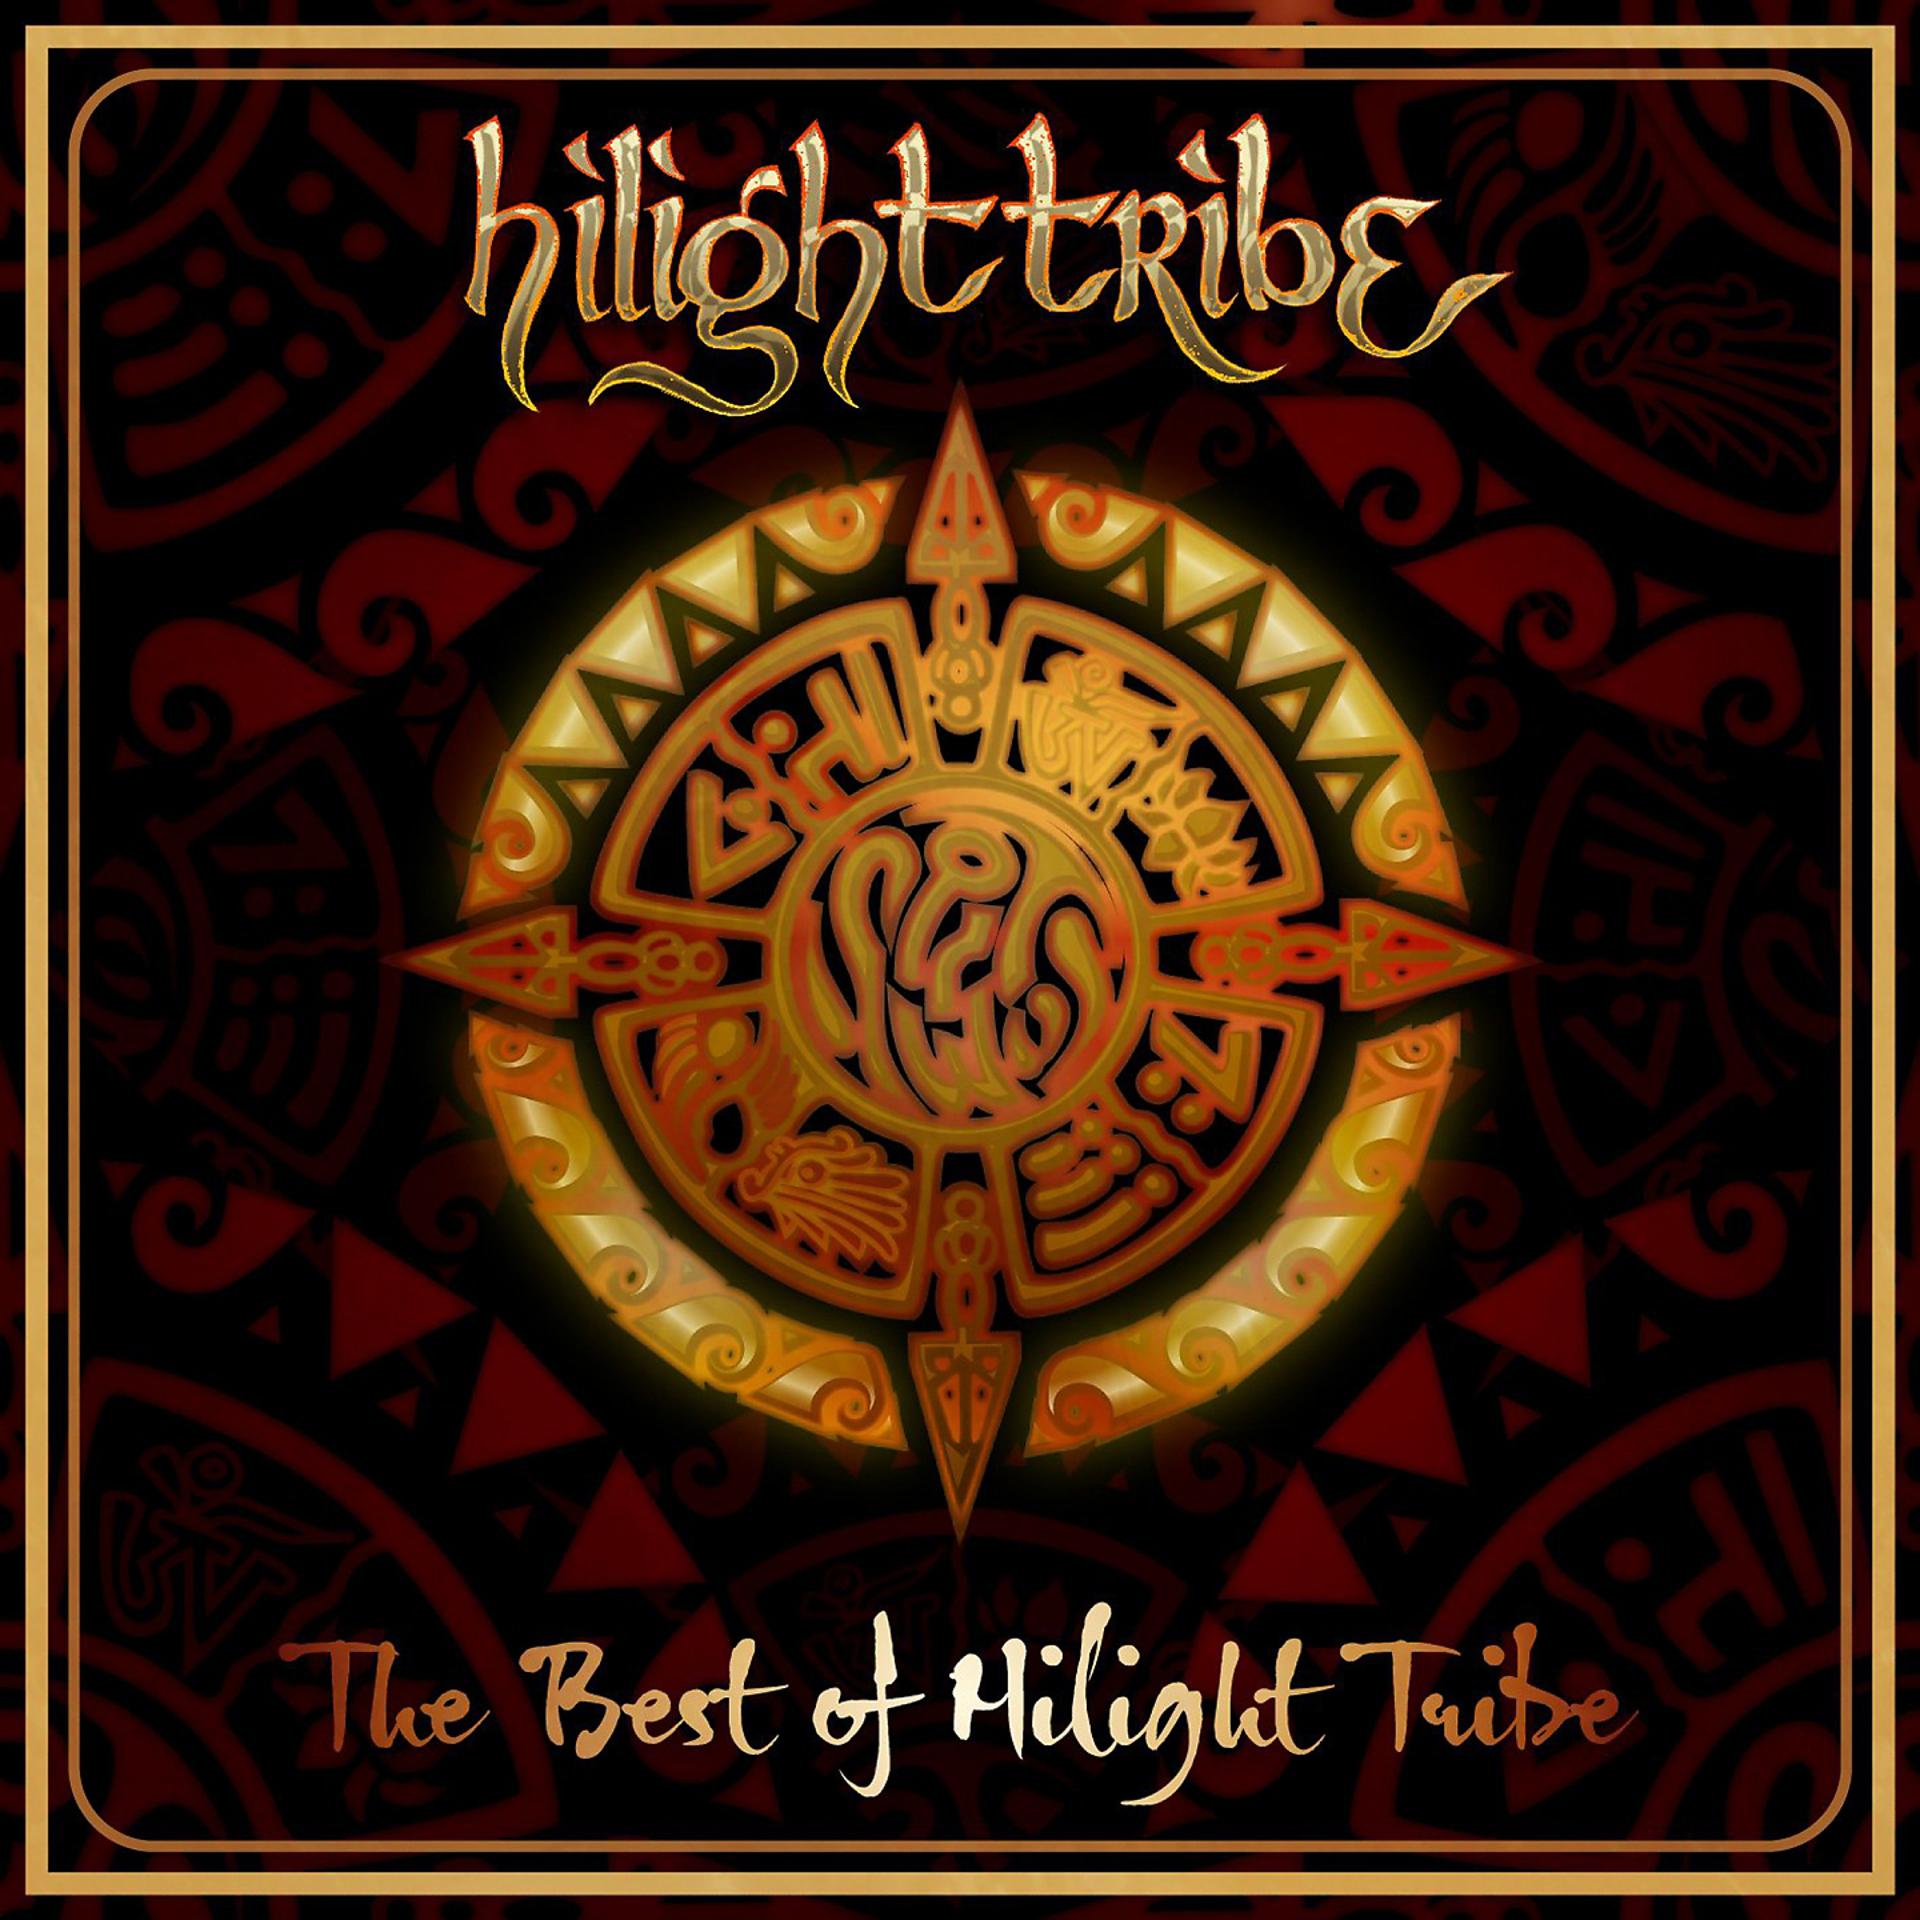 Hilight tribe